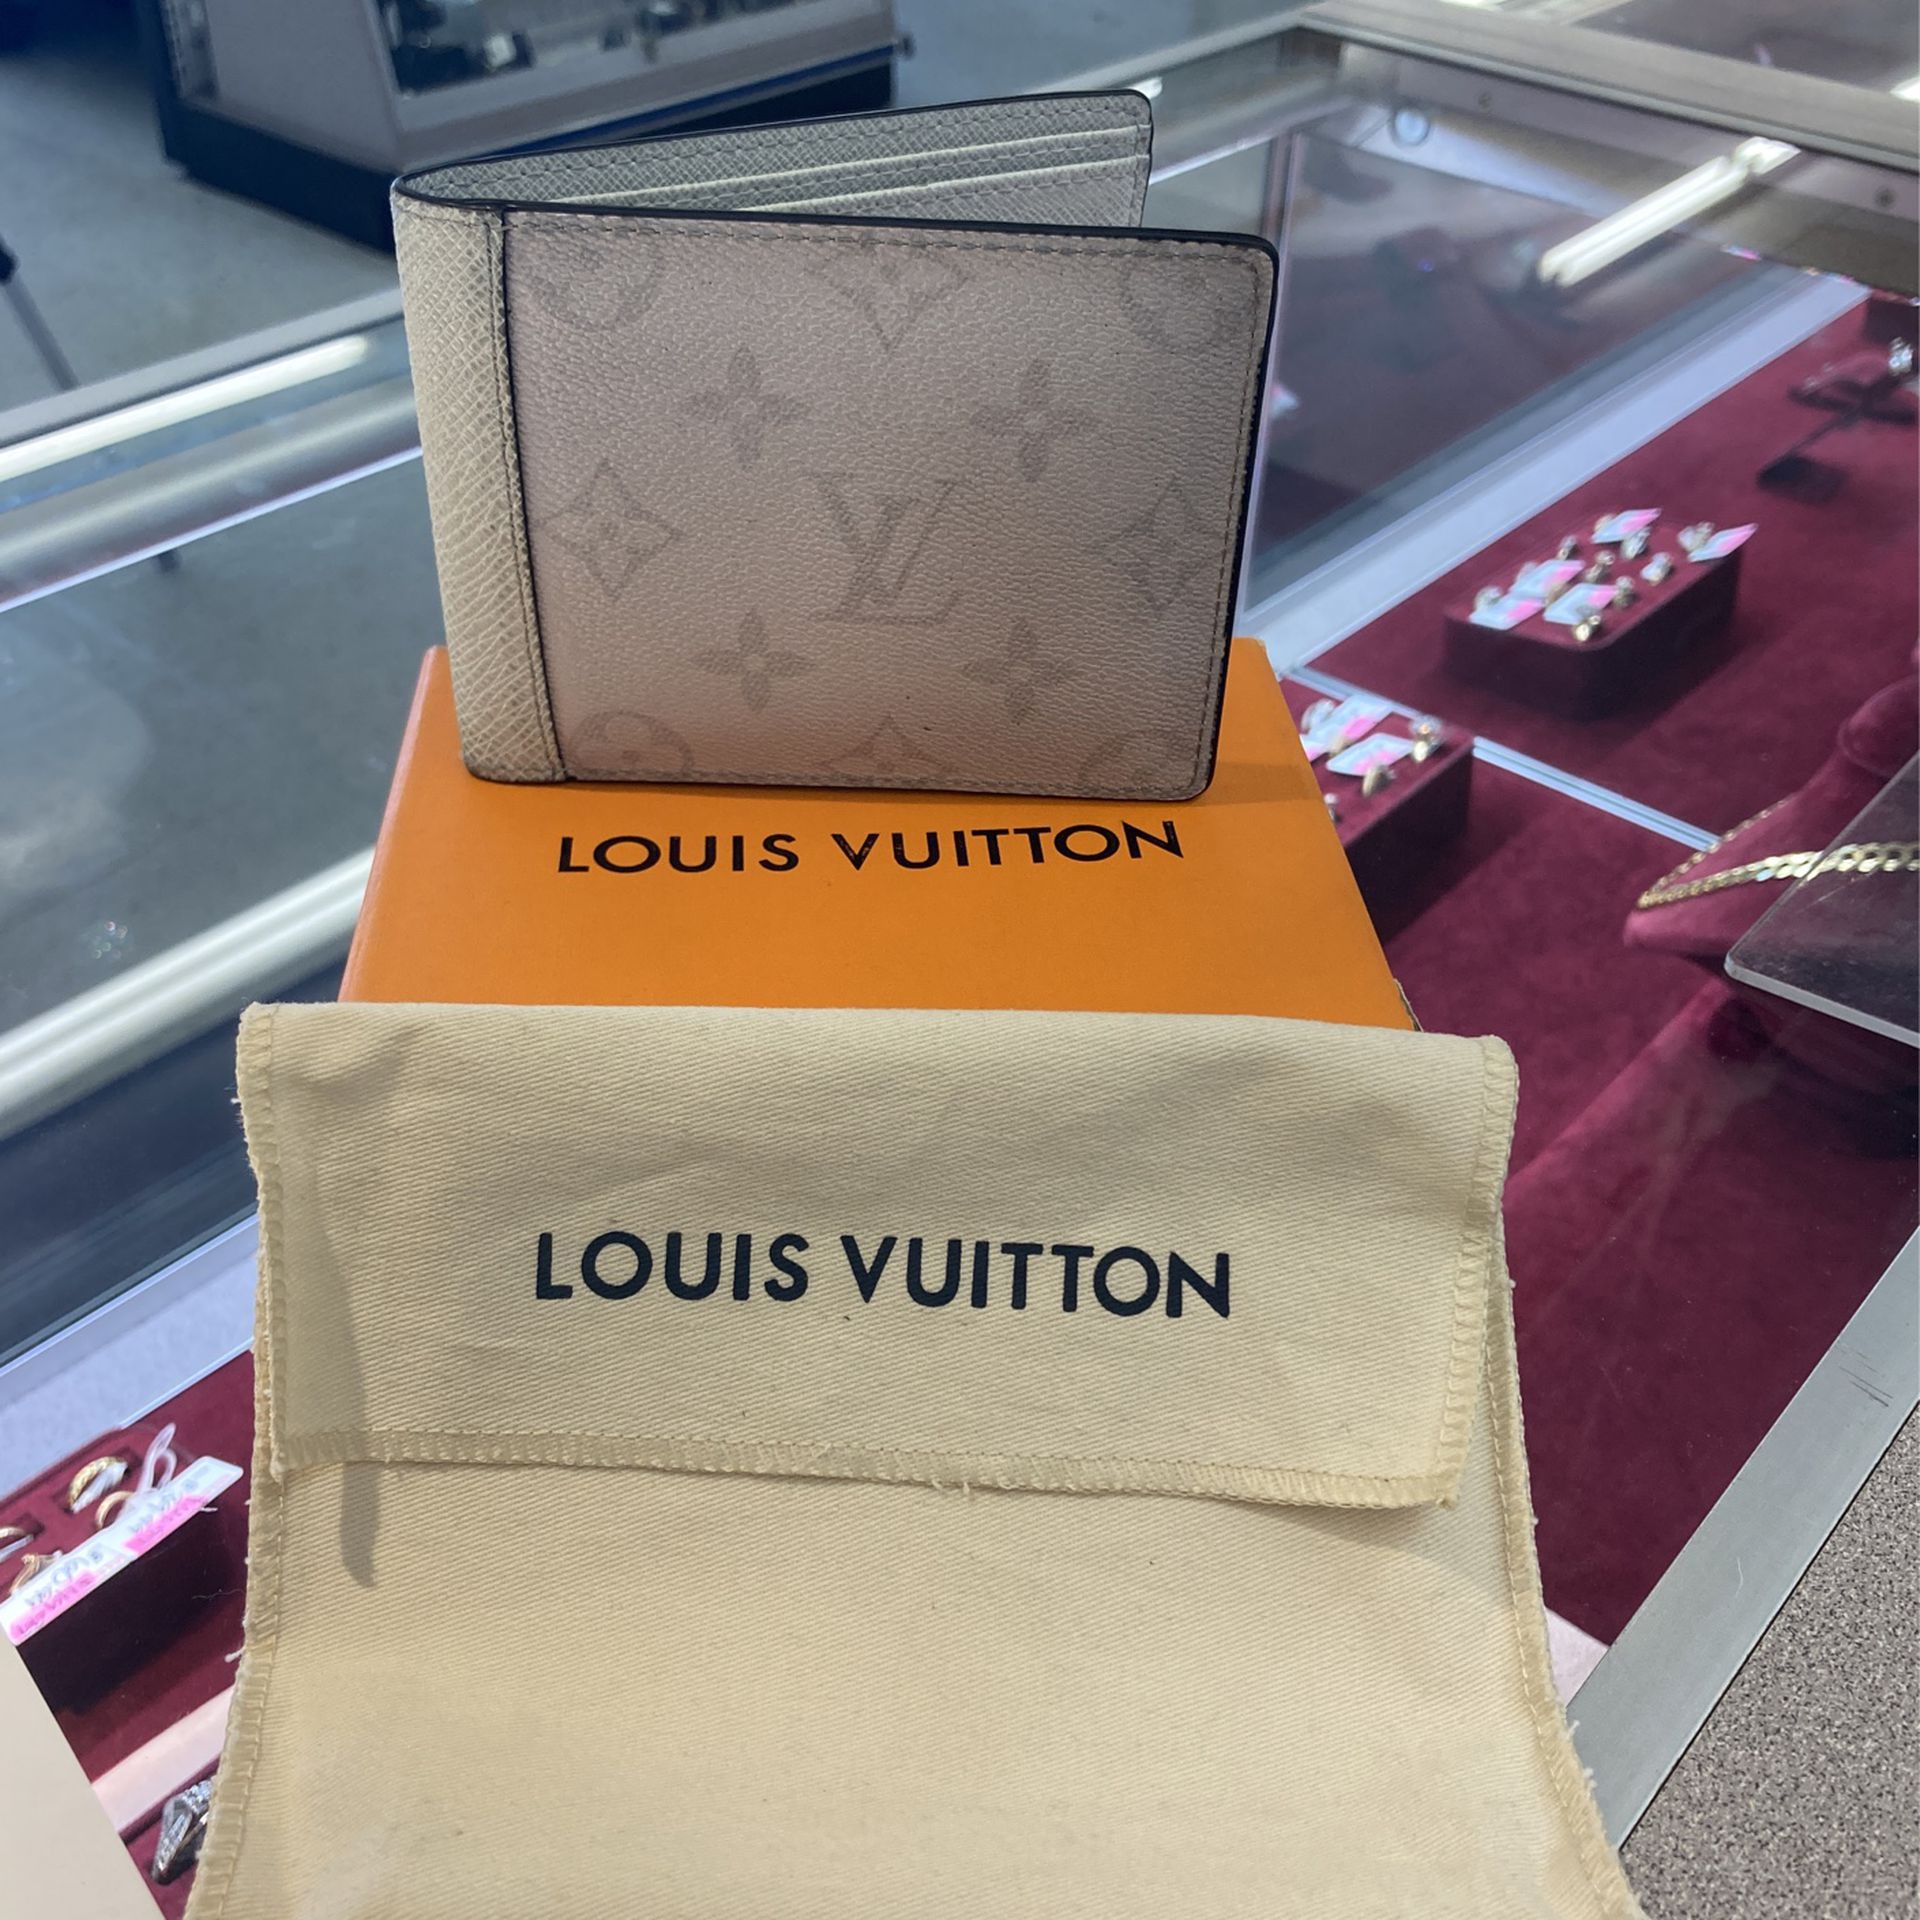 Louis Vuitton - Northwest Side - San Antonio, TX